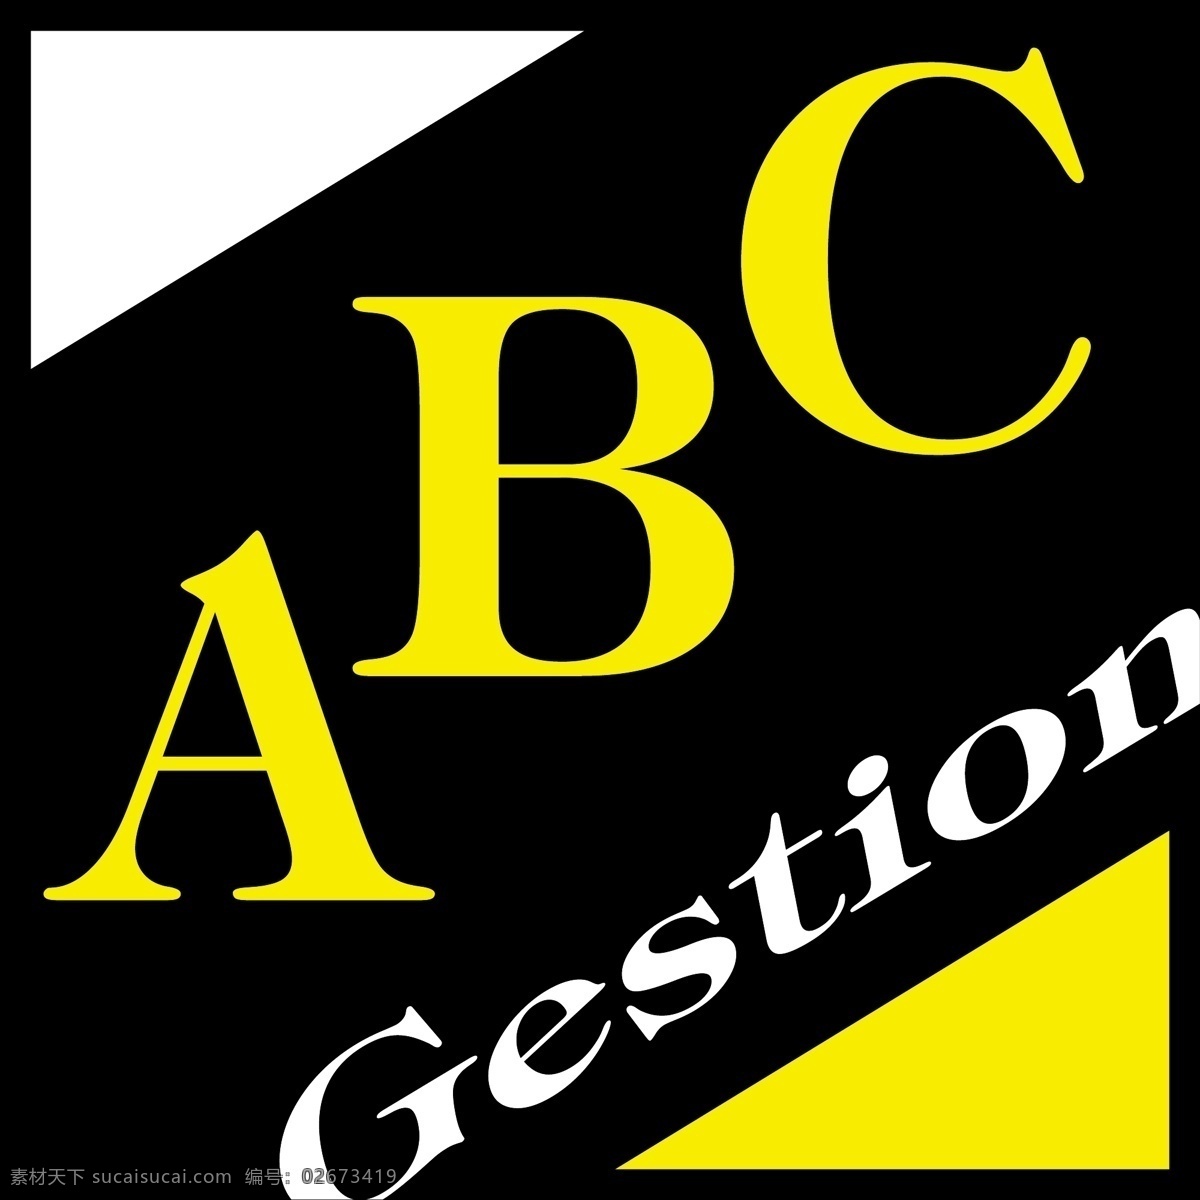 abc 公司 标志 标志矢量 管理 abc管理 管理的标志 标志设计标志 新闻 标志矢量管理 广播 标识 标识abc 矢量 abc的标志 格式 矢量图 建筑家居